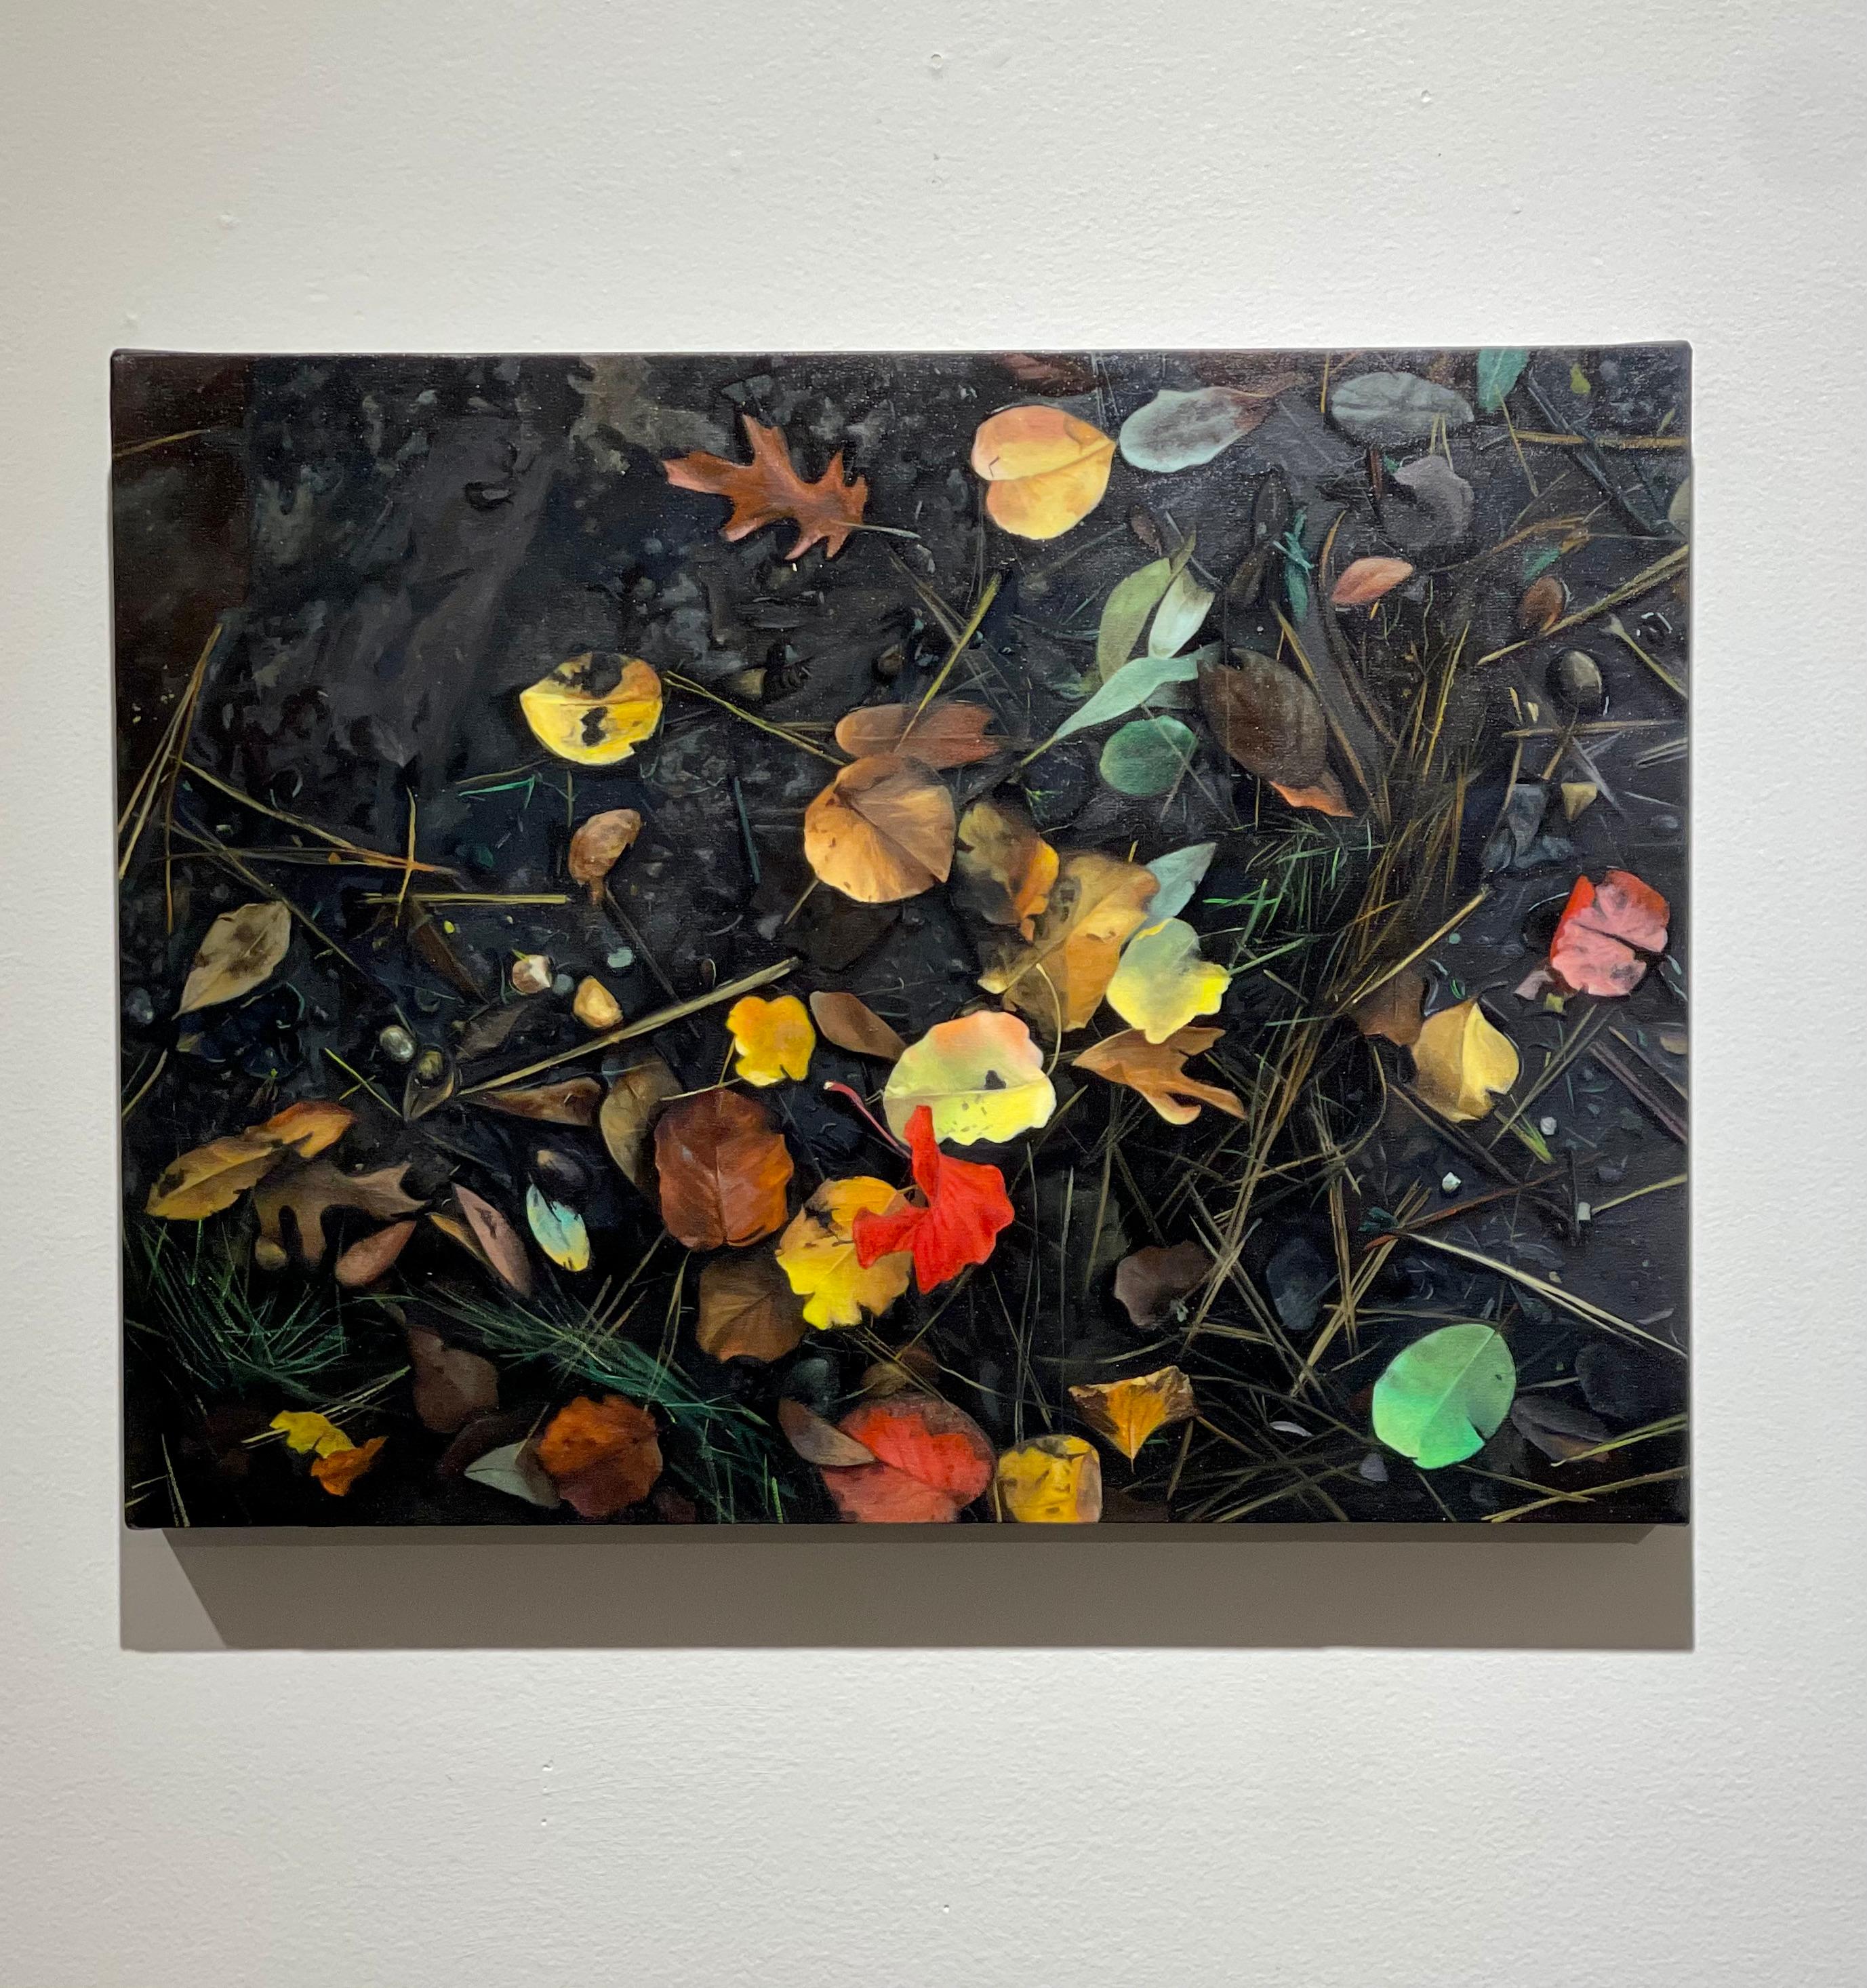 Landscape Art Mihee Nahm - Dark, Moody, Wet, Detailed, Peintures à l'huile, taille moyenne, diptyque naturel